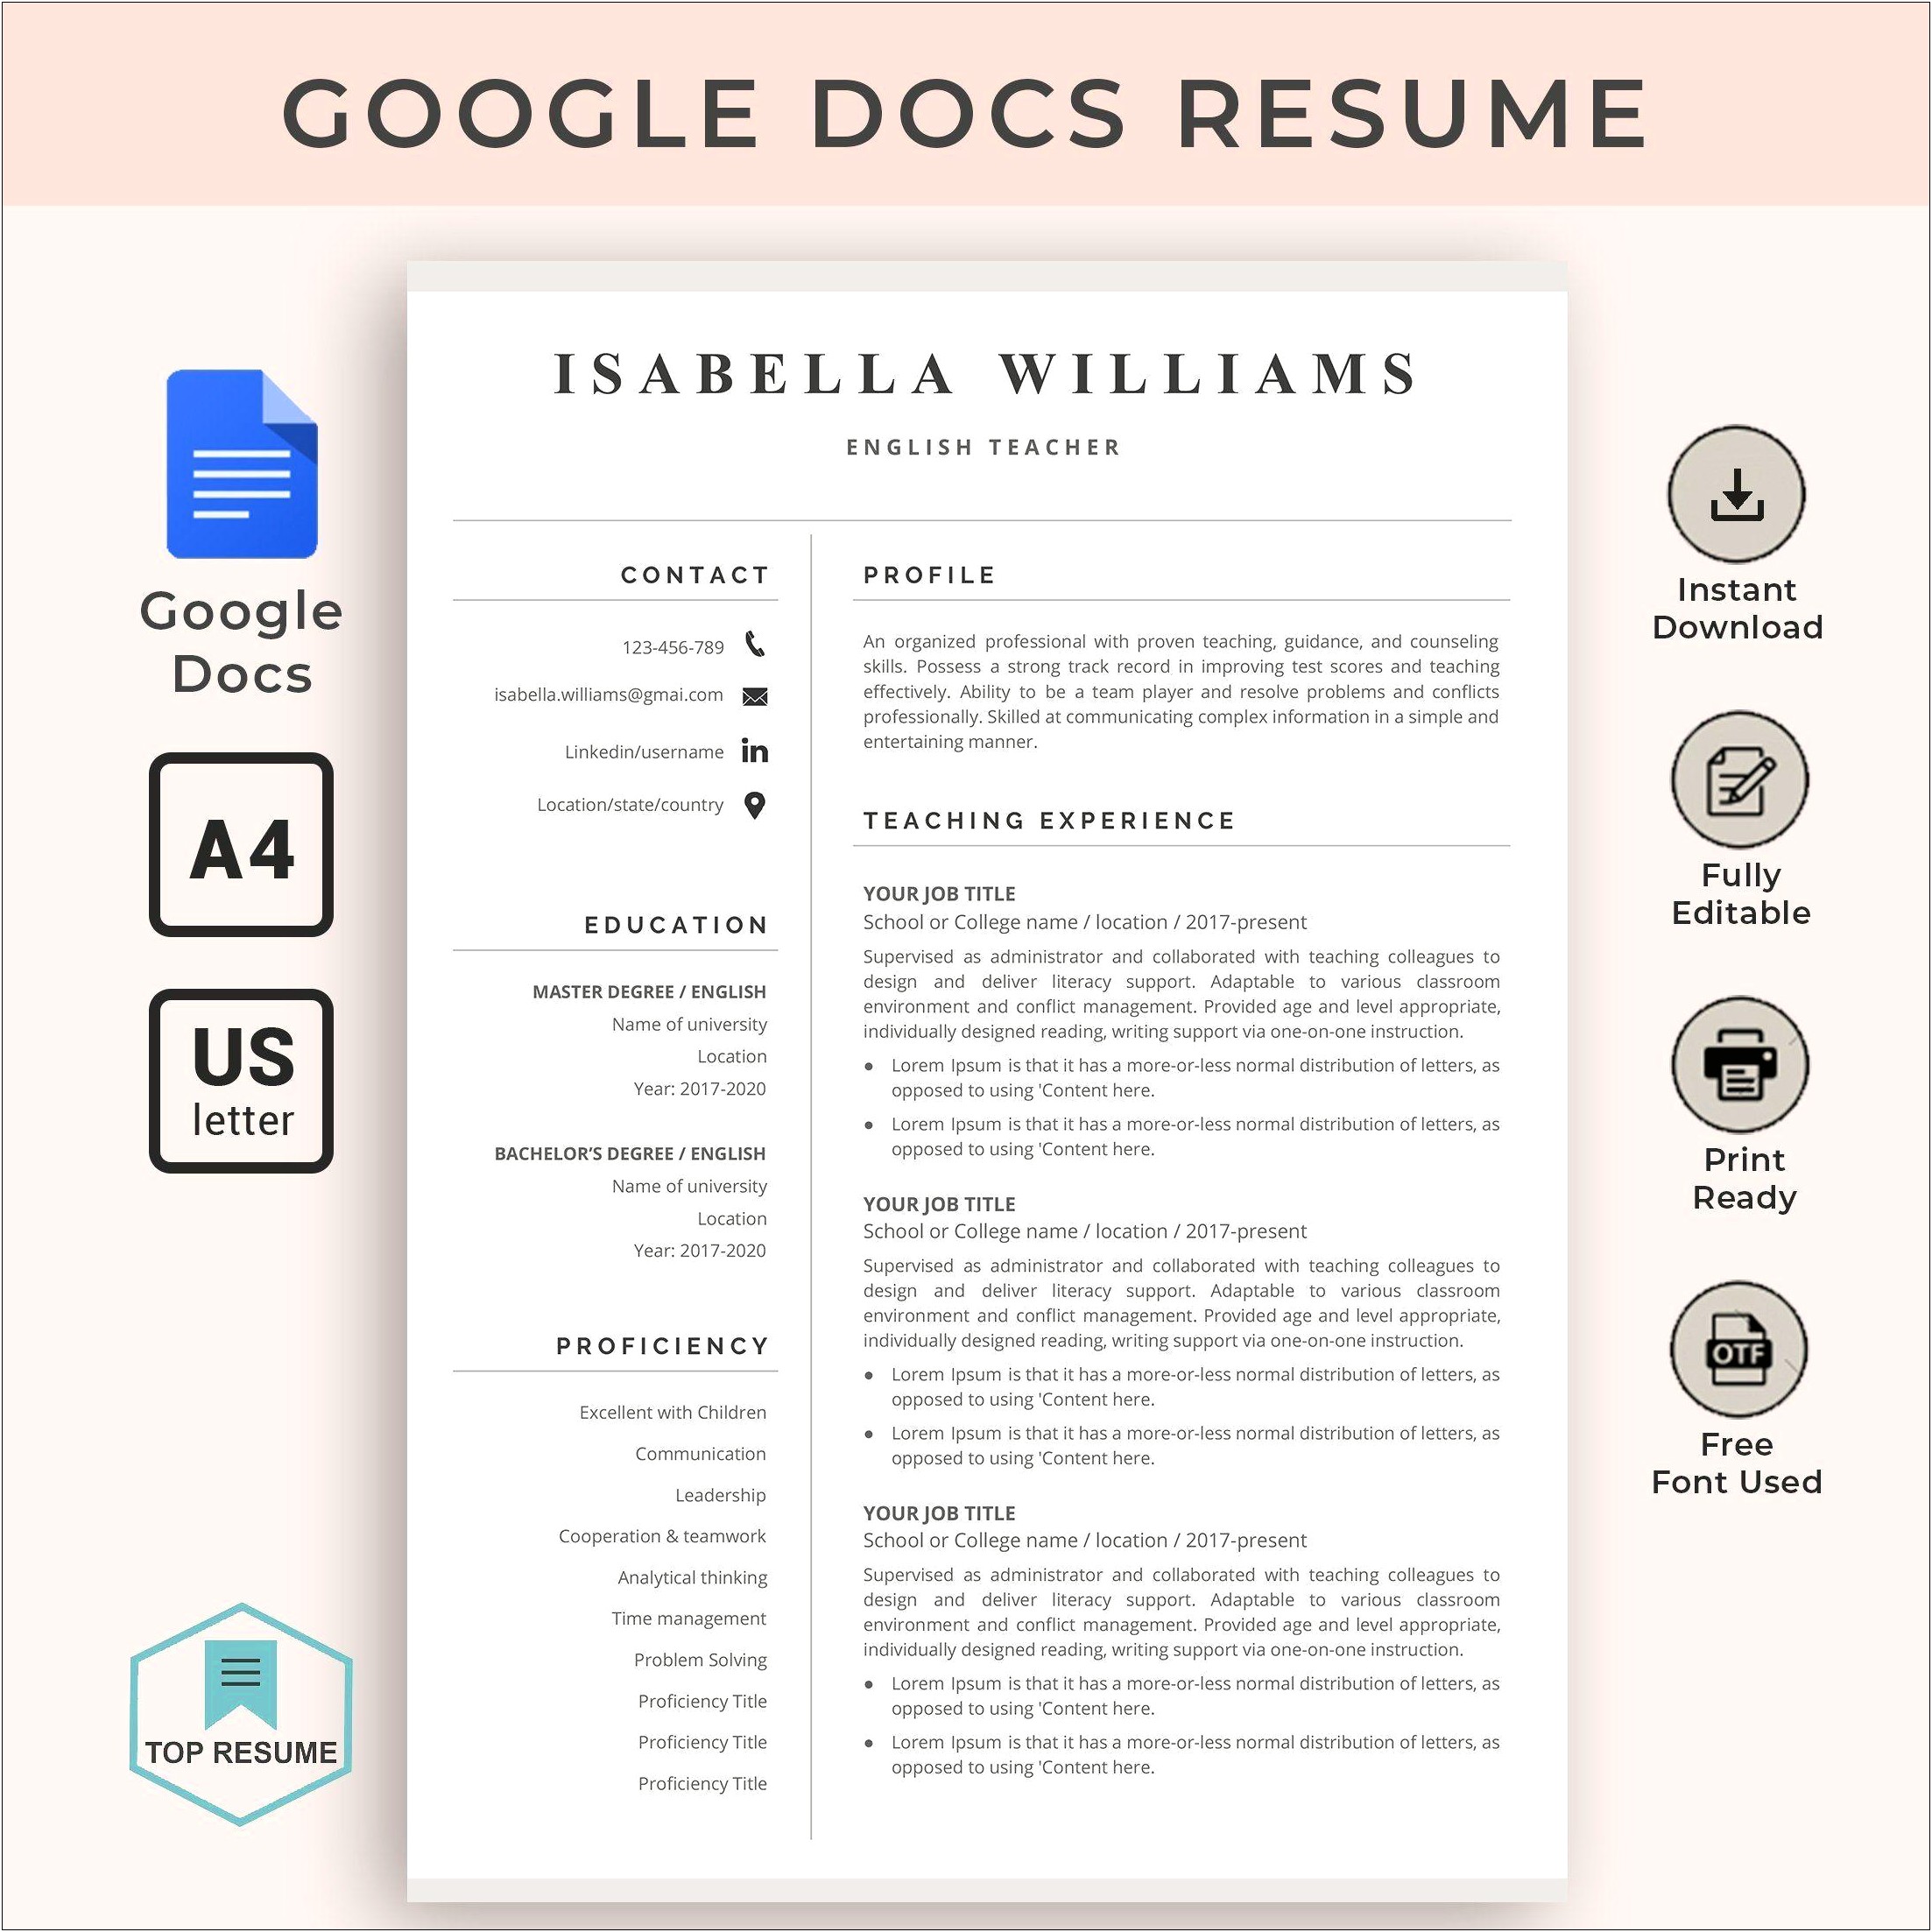 Google Docs Resume Template Skills